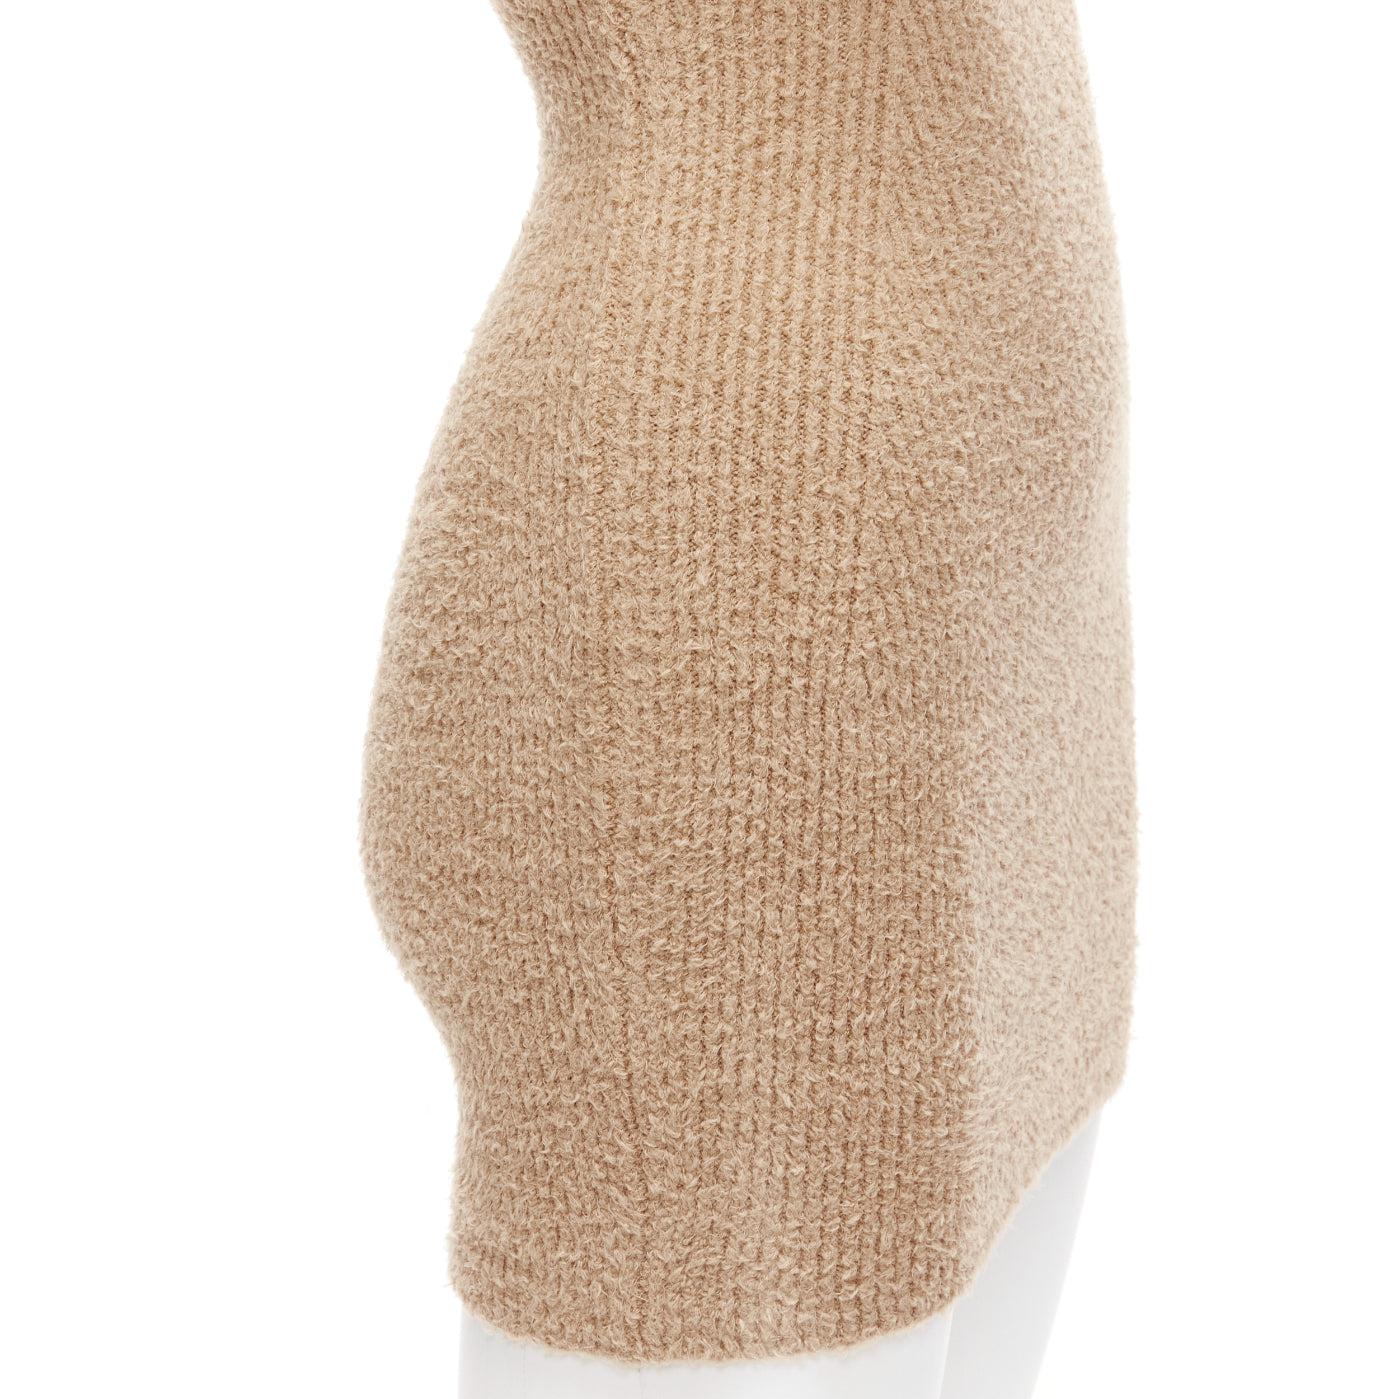 WARDROBE NYC HAILEY BIEBER HB tan fuzzy knit cotton one shoulder mini dress S For Sale 3